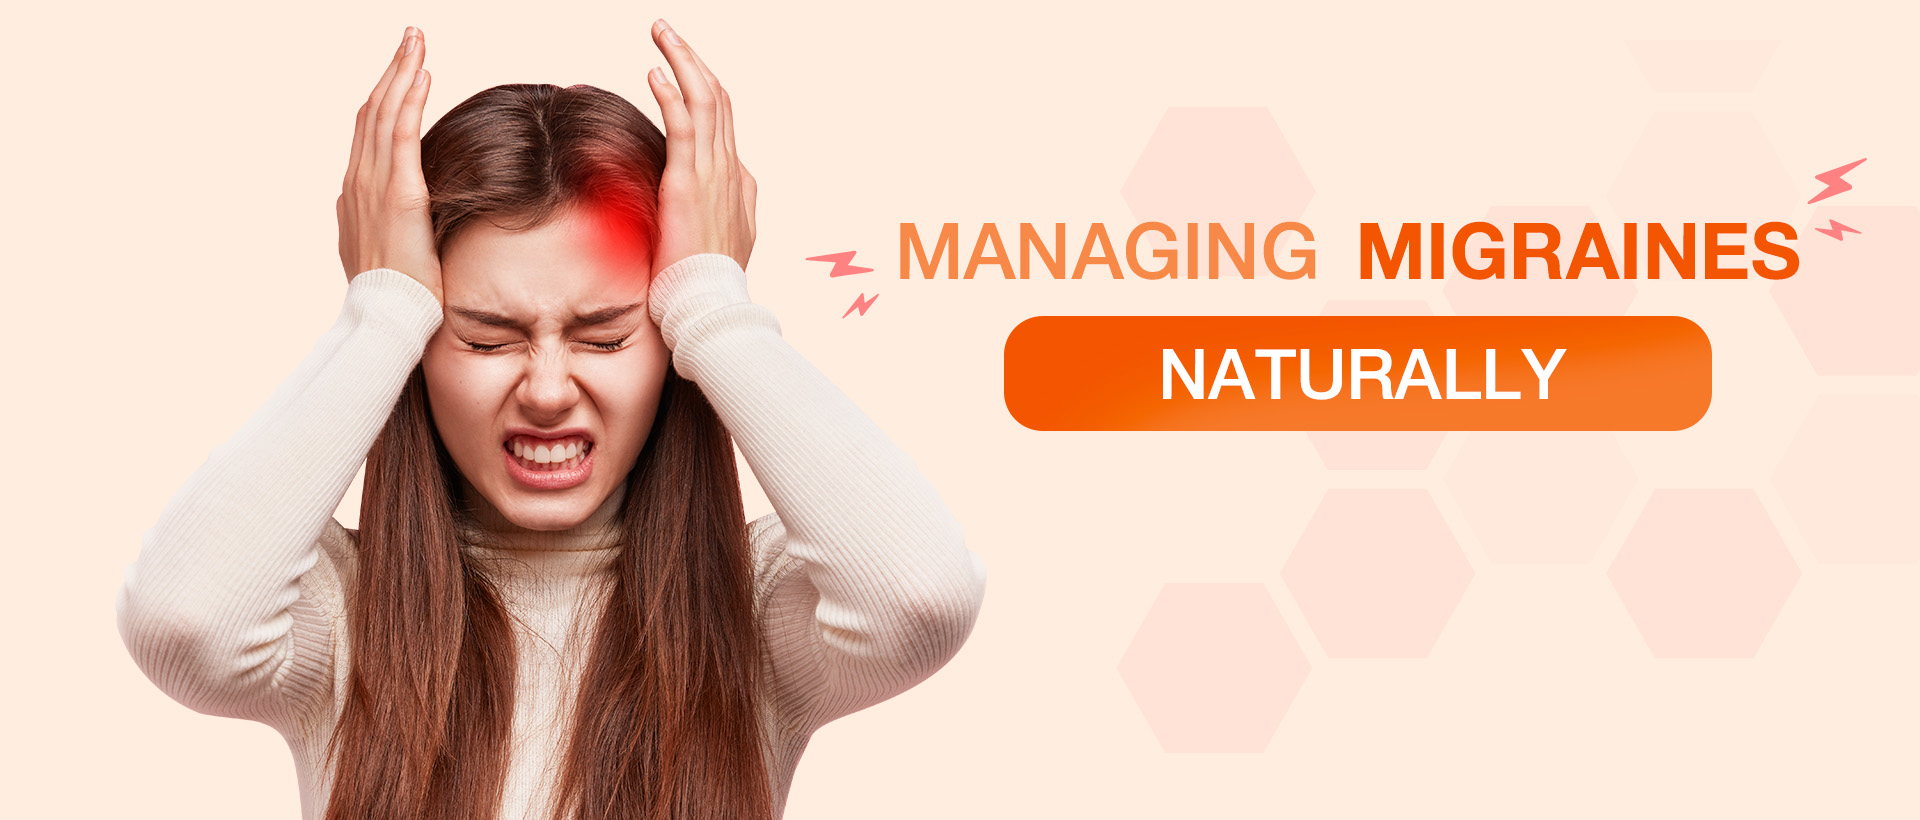 Managing migraines naturally